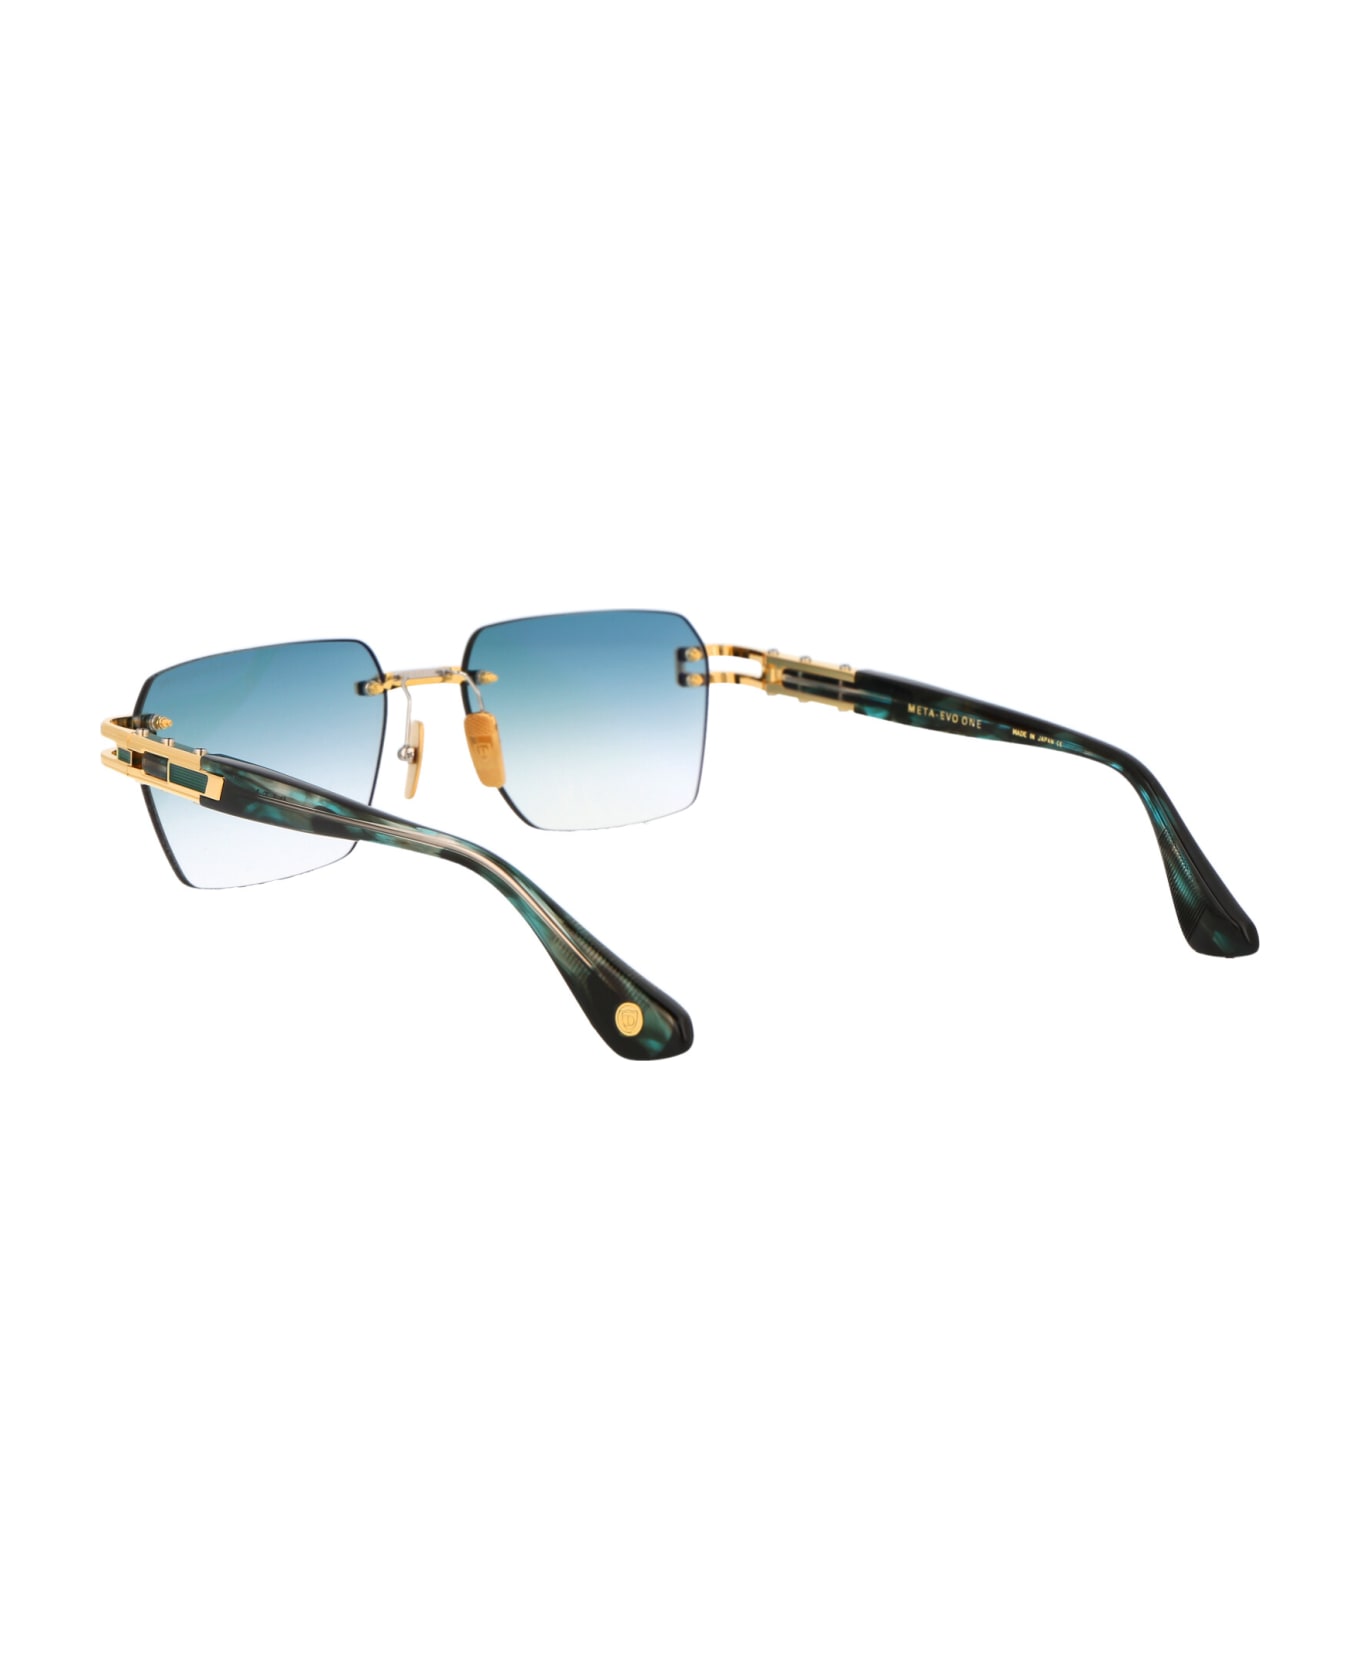 Dita Meta-evo One CT0328S Sunglasses - S00163 geometric-frame CT0328S sunglasses